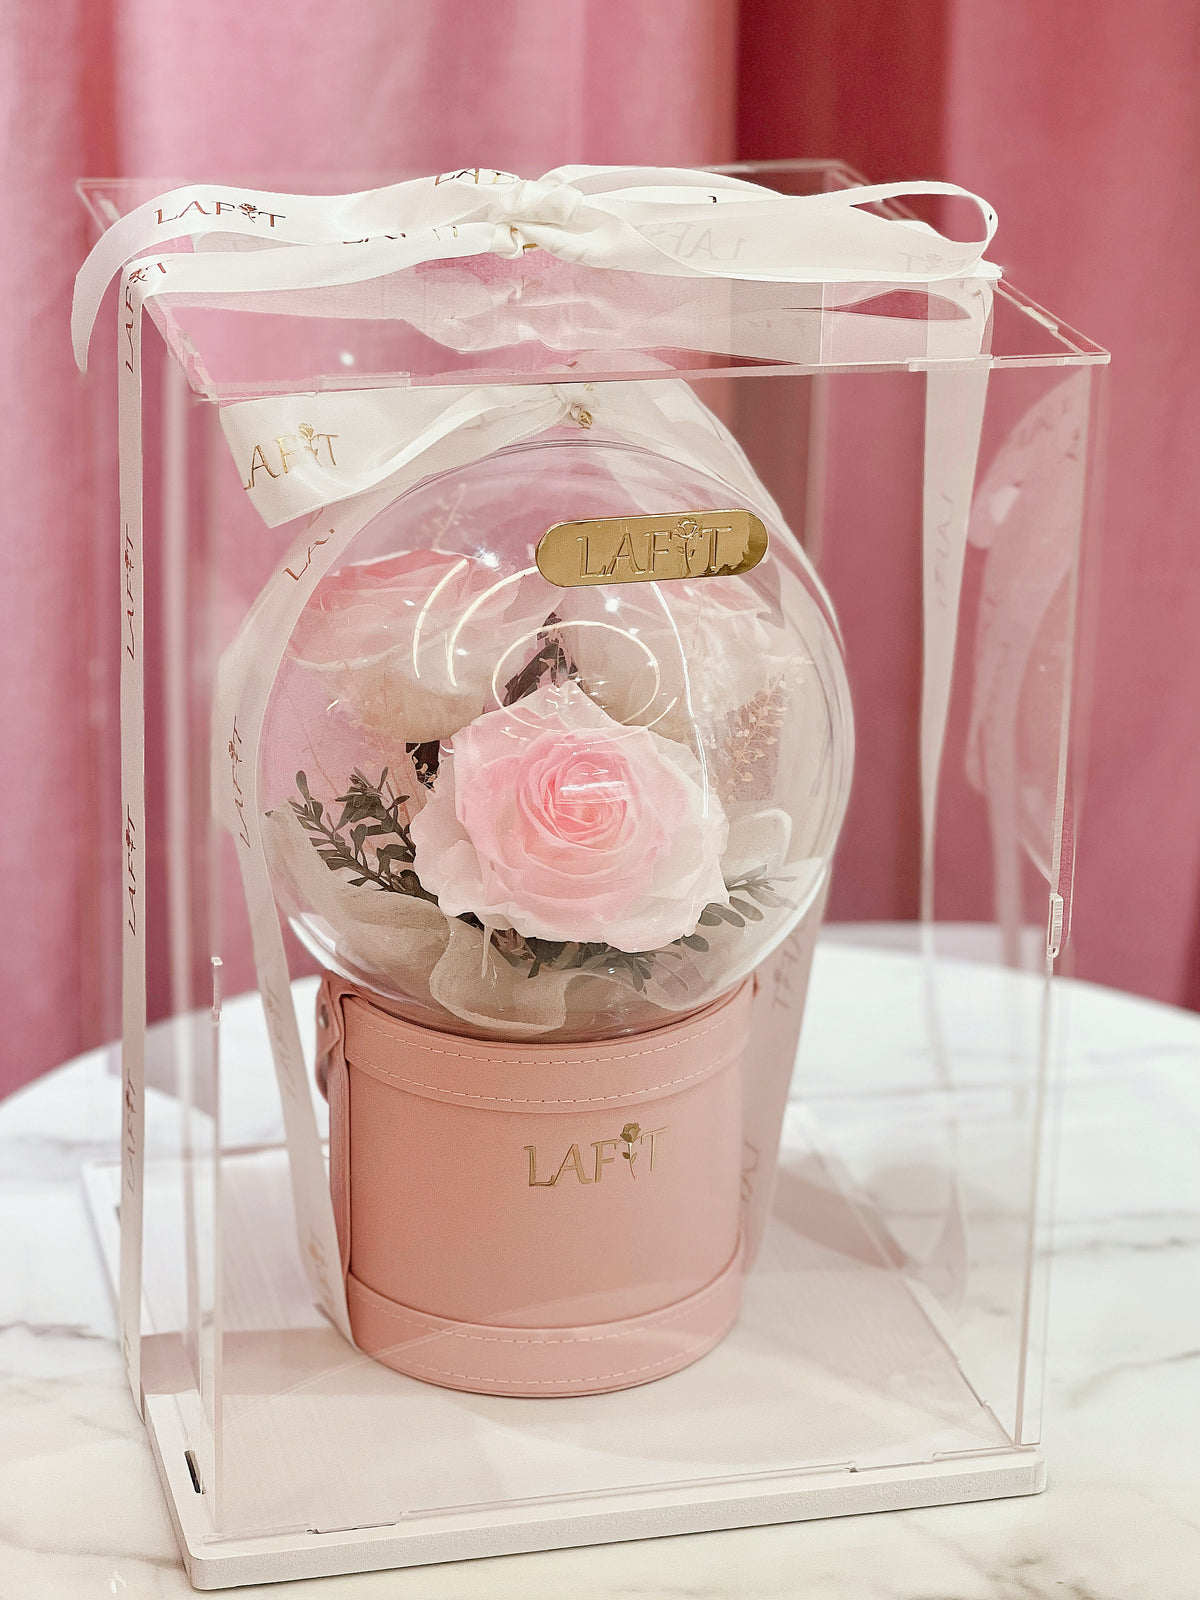 LAFIT 夢幻浪漫櫻粉色永生花藝擺設 · Rose Sparkling Bubble - Sakura Pink